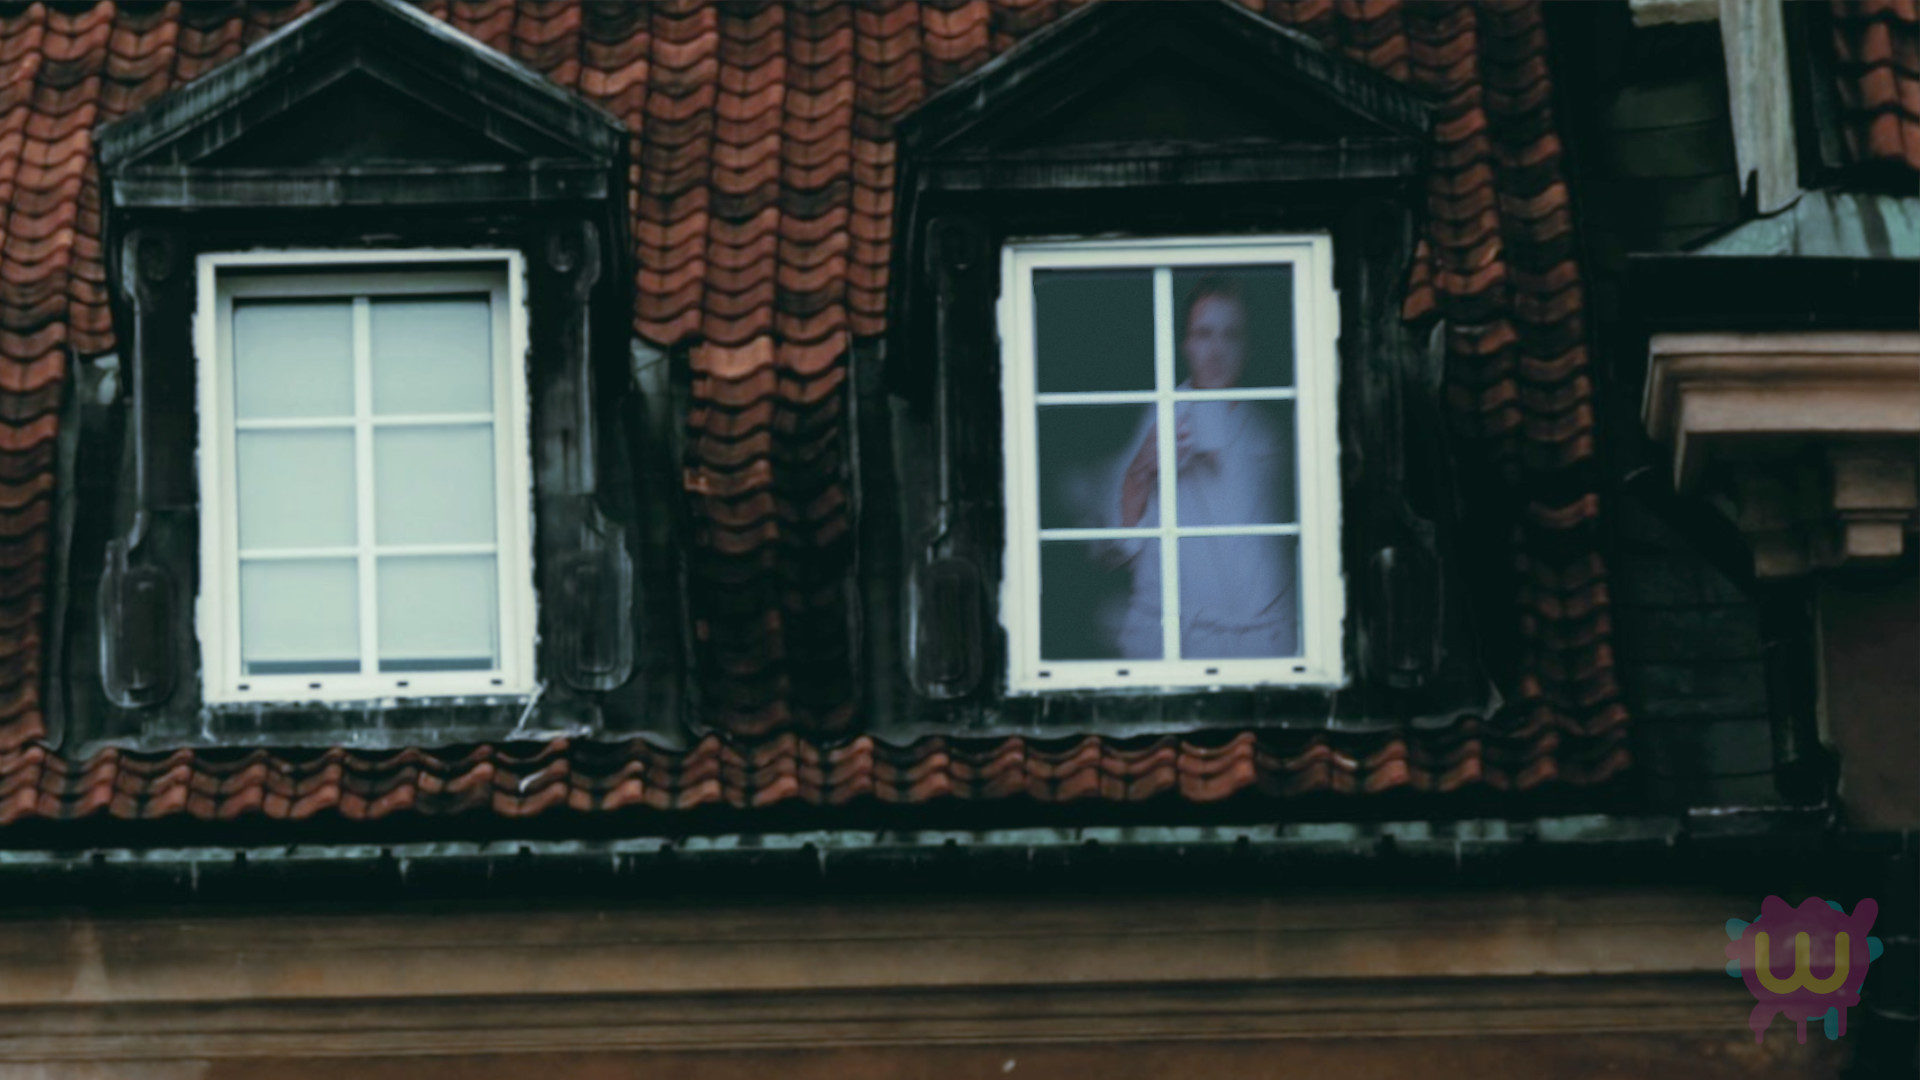 Ghost in Luxembourg window jut man who's teleworking